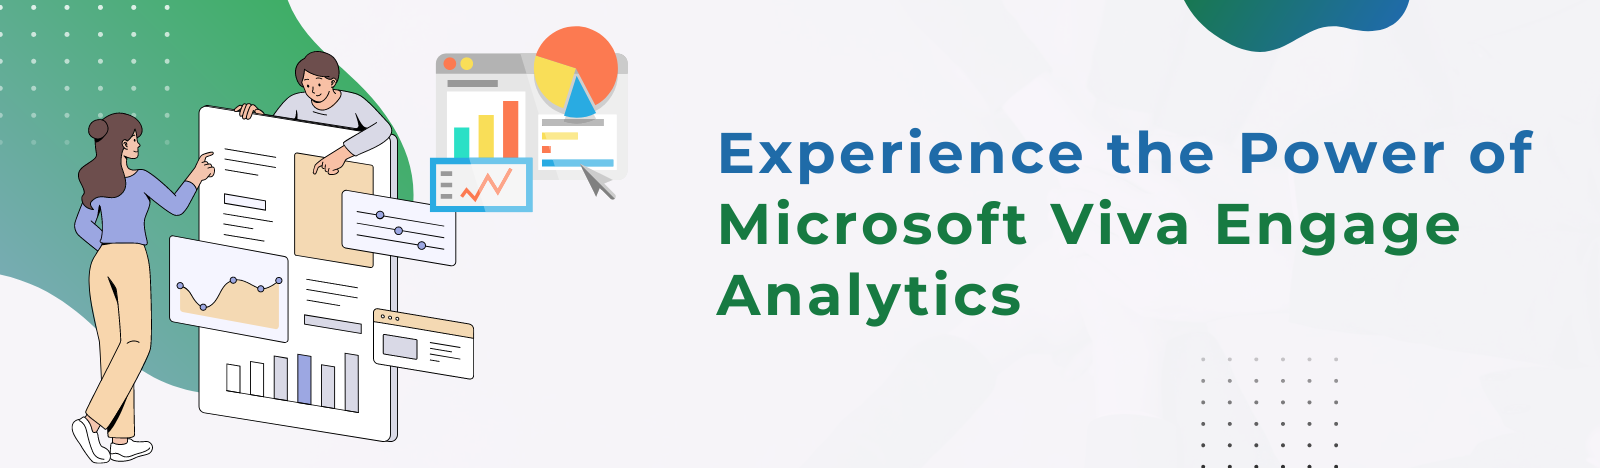 Experience the Power of Microsoft Viva Engage Analytics